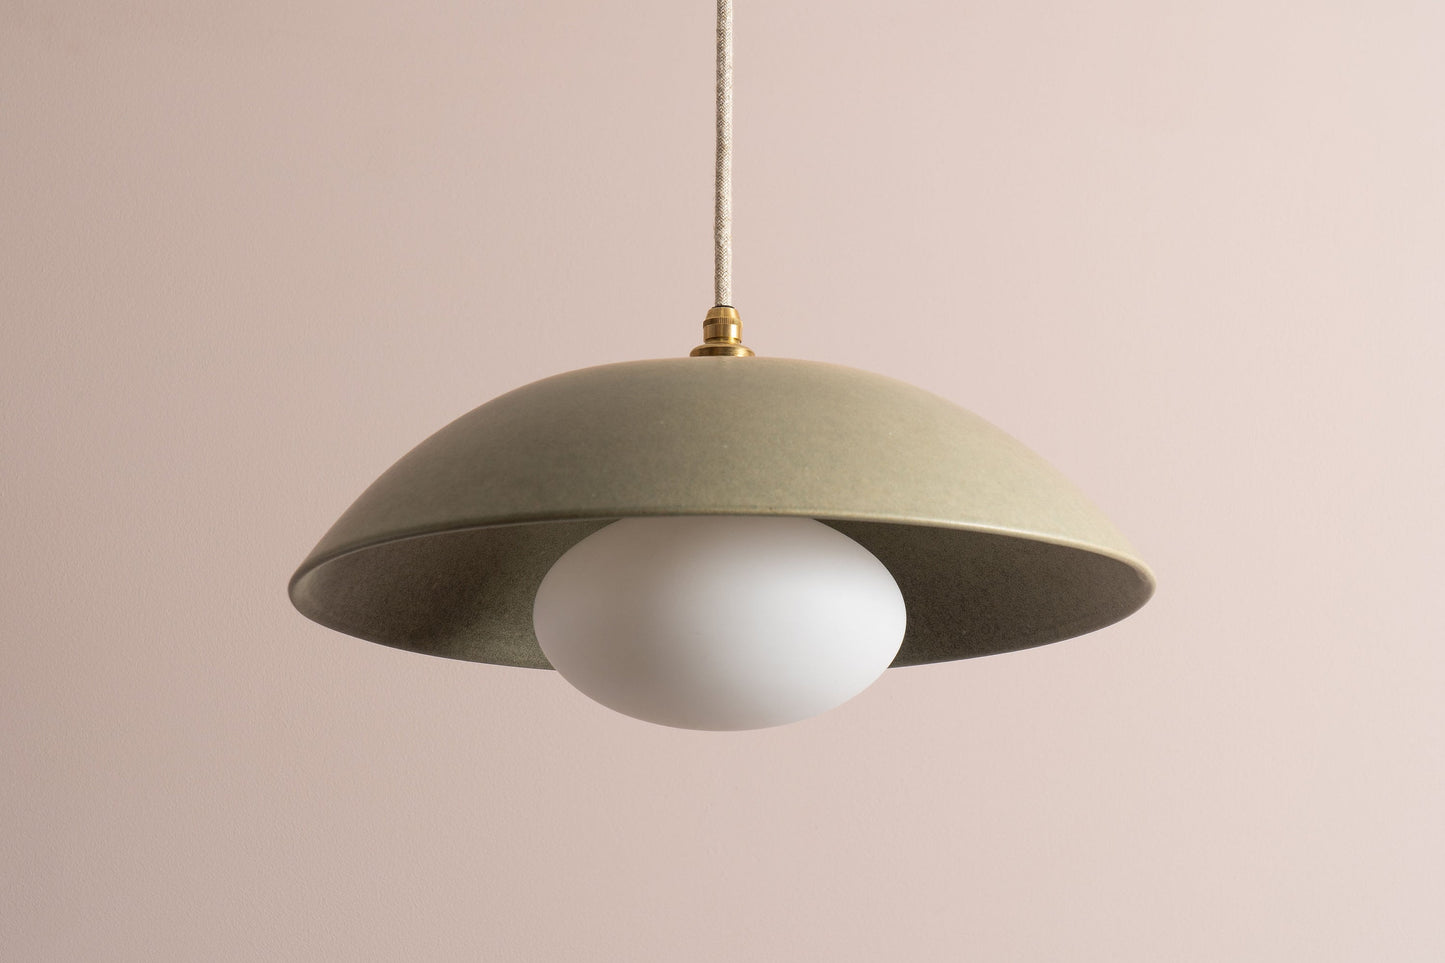 Green Dusk Ceramic Lamp Shade and Pendant Set by StudioHaran